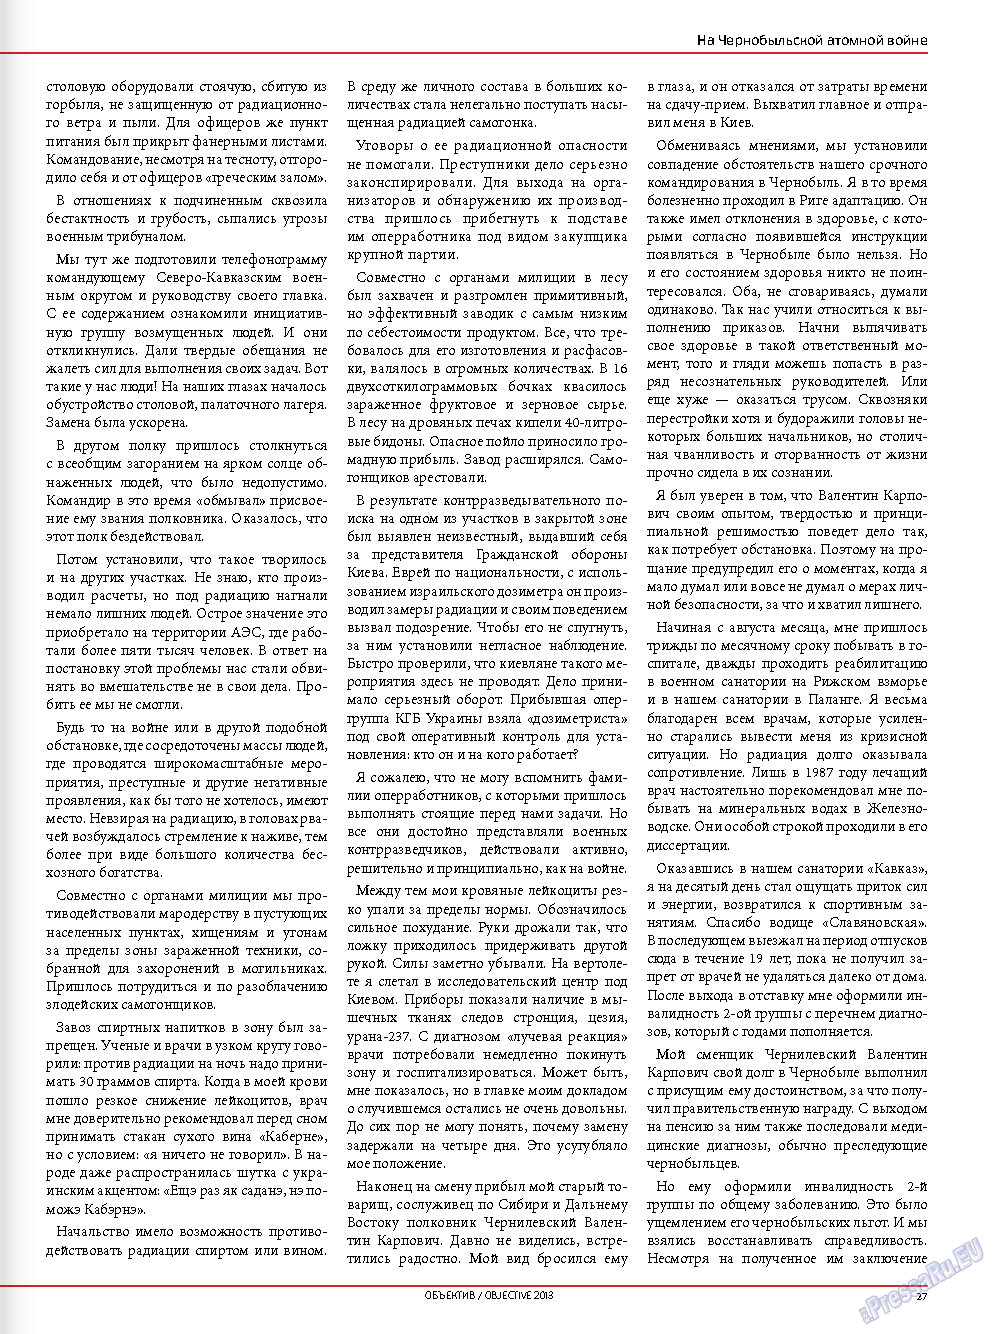 Объектив EU, журнал. 2013 №1 стр.29